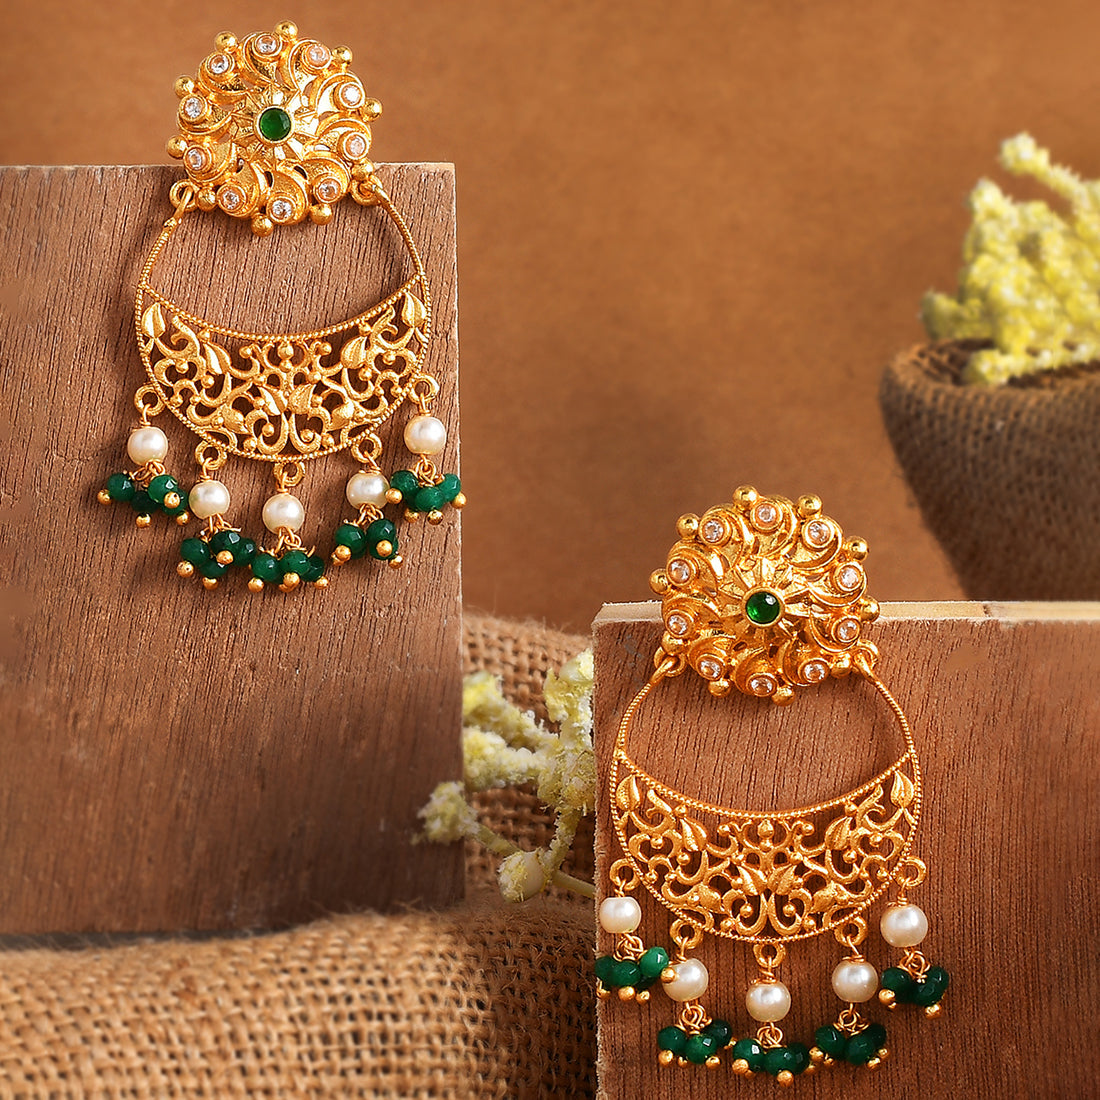 Women's Abharan Gold Plated Filigree Green Stone Earrings - Voylla